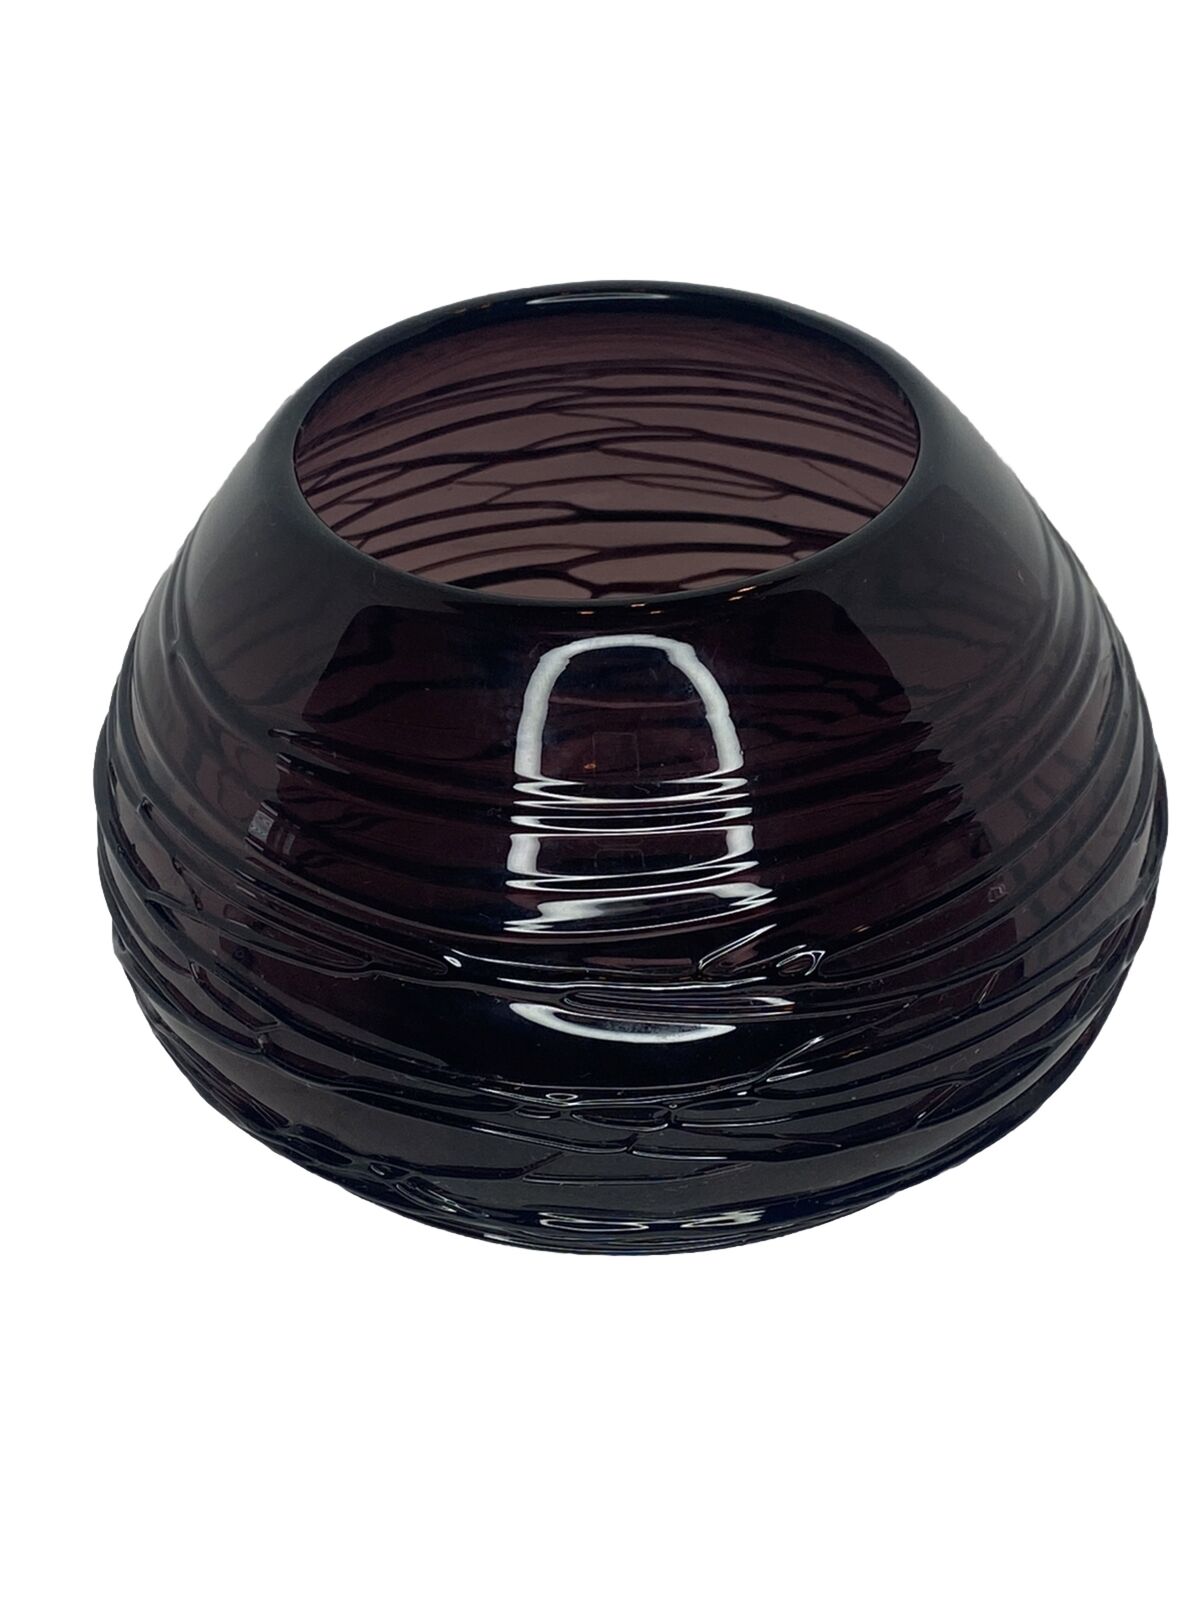 Azerbaijan Handcrafted Bowl Vase Glassware Purple Black 5.5” Original Sticker